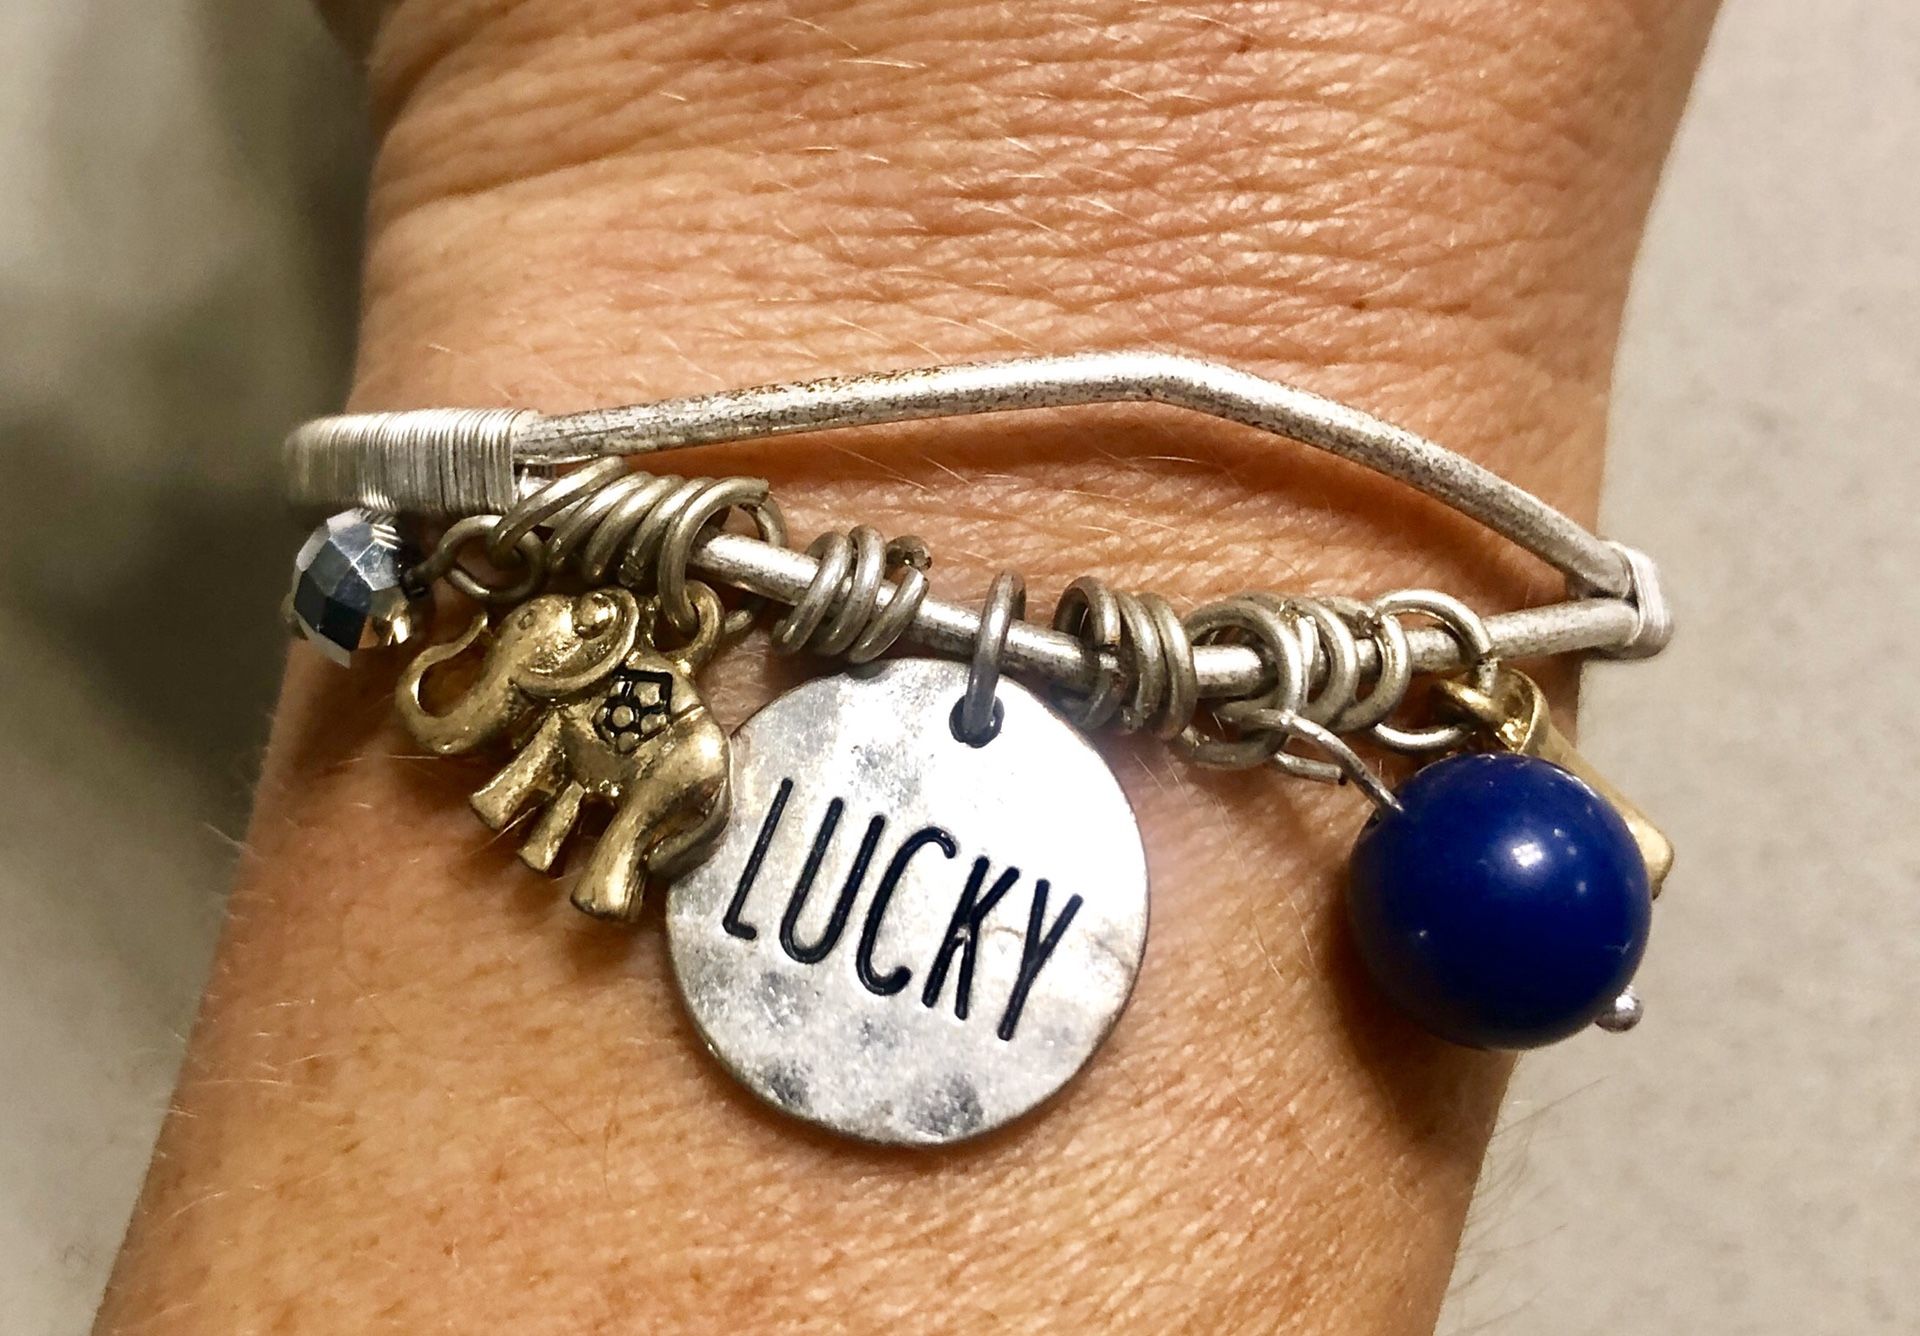 NWOT Lucky brand cuff charm bracelet.